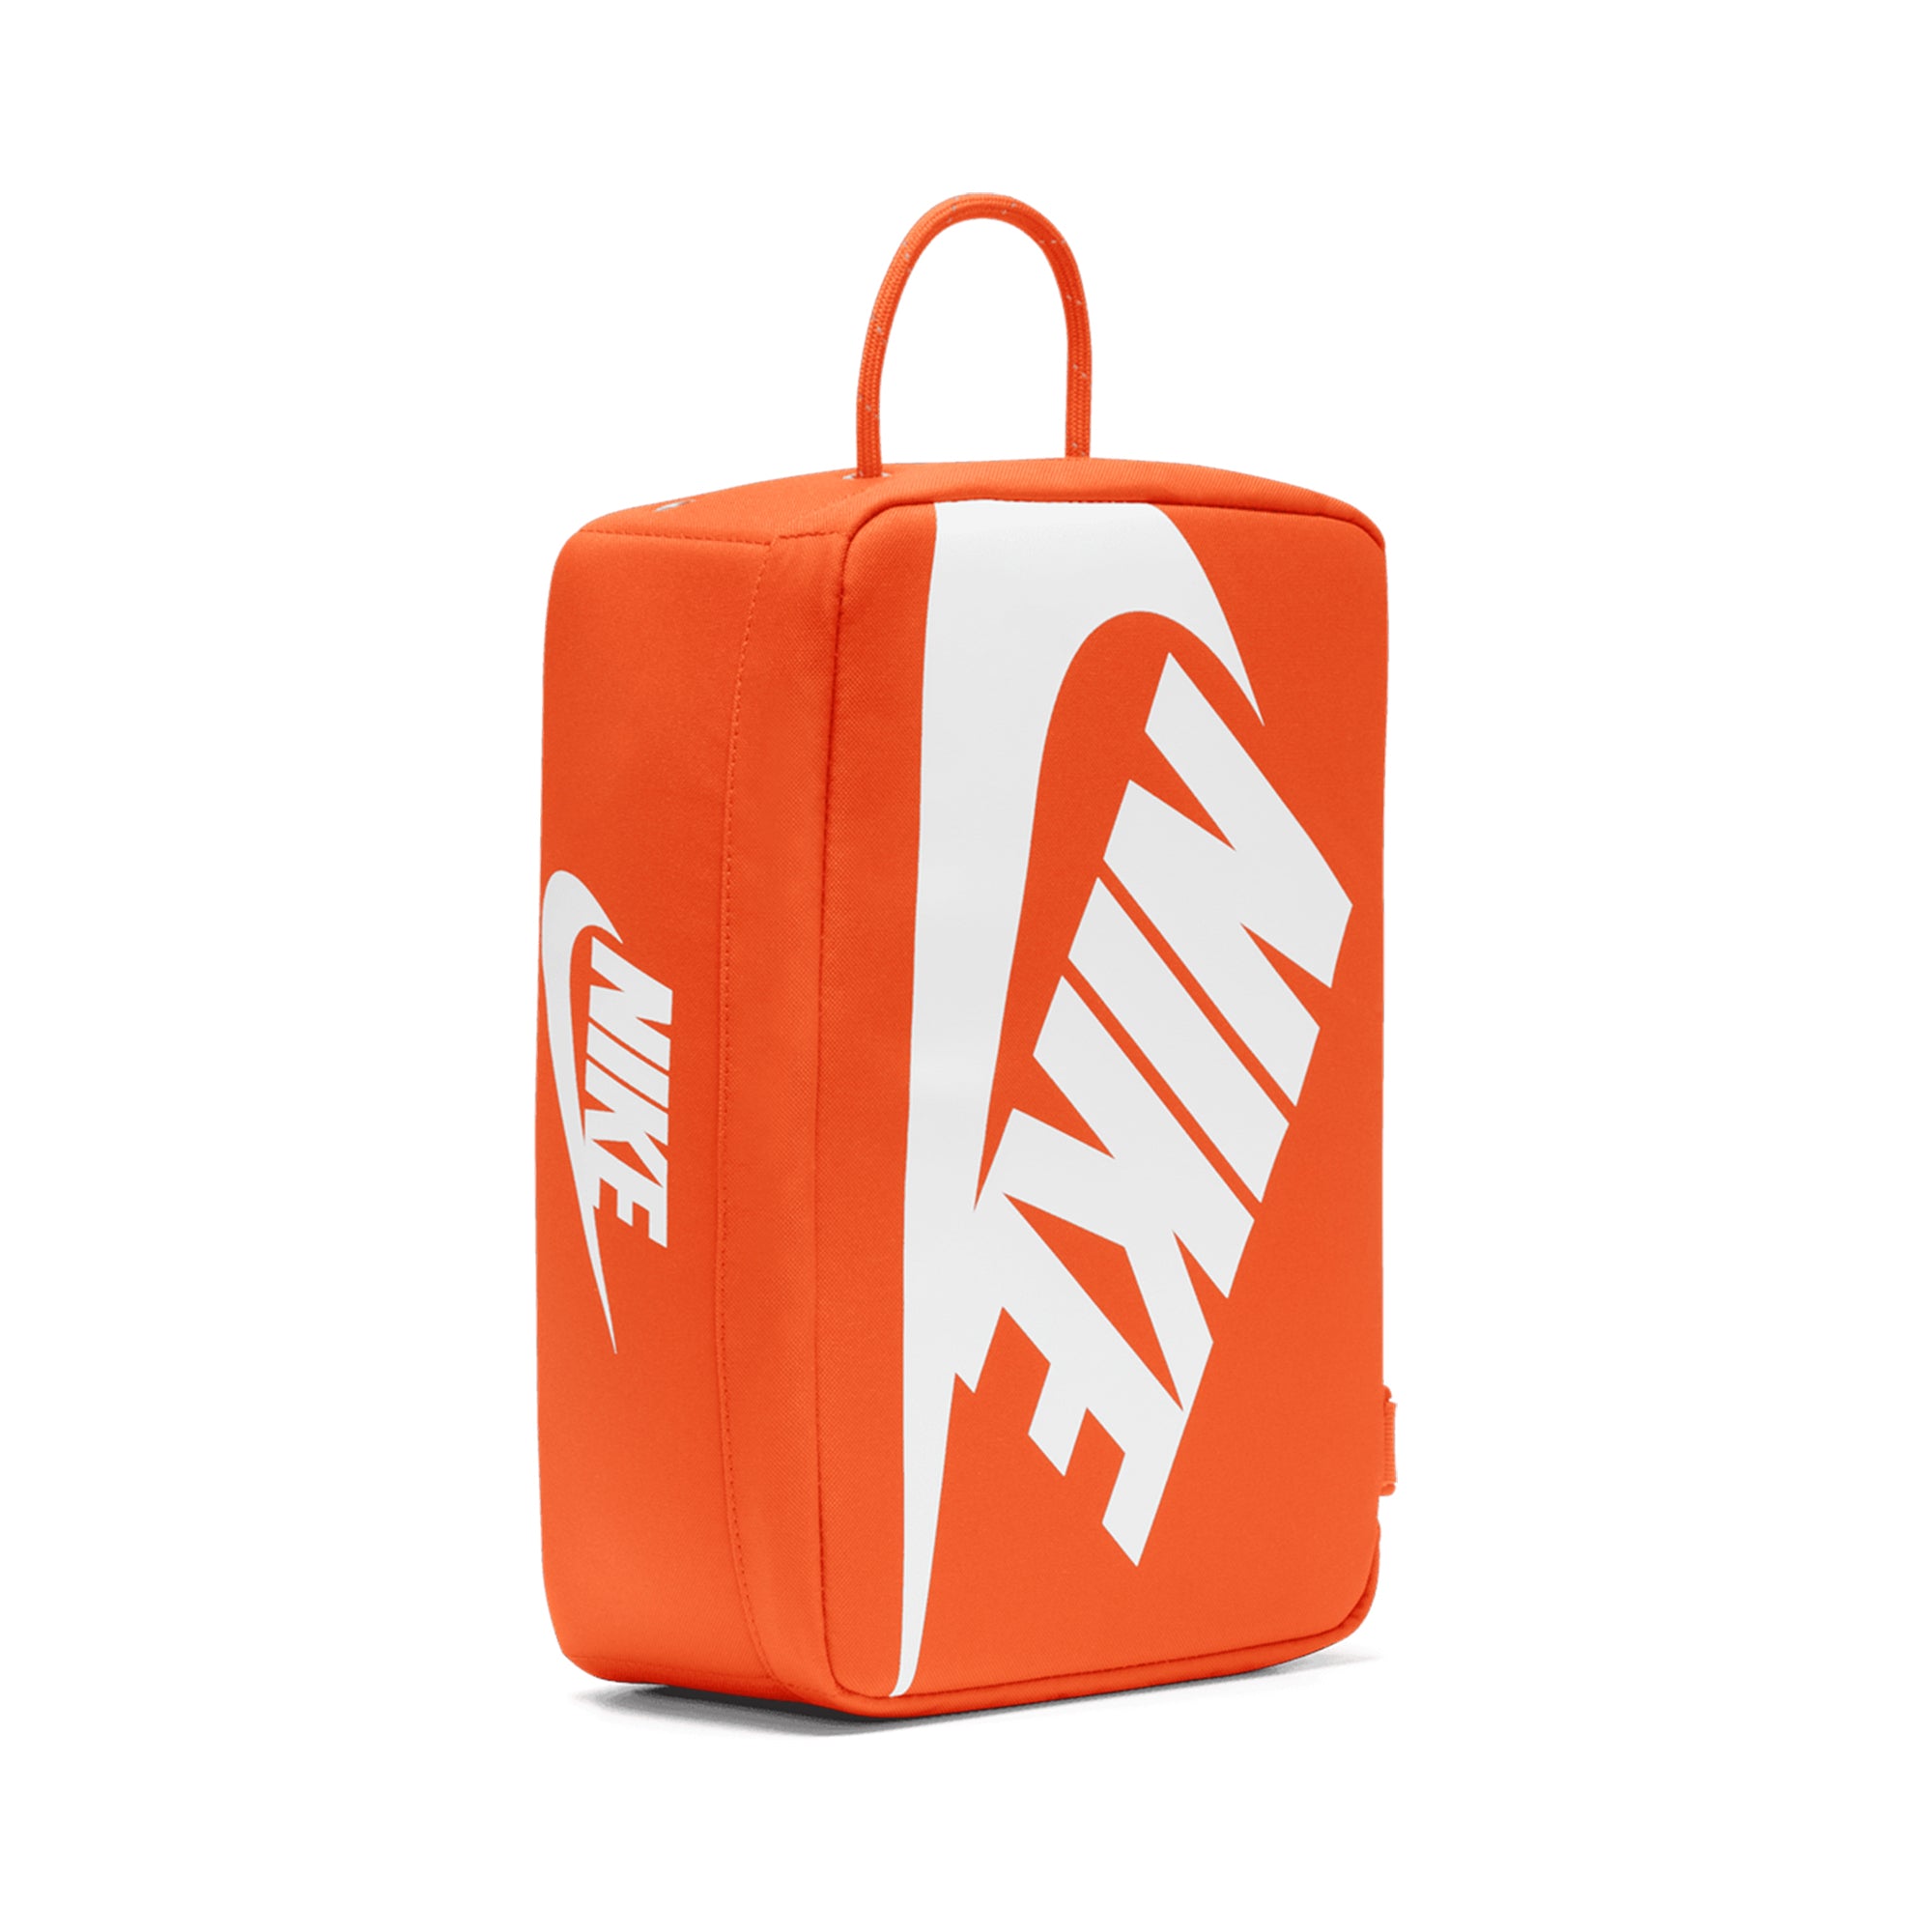 nike-golf-shoebox-bag-da7337-orange-870